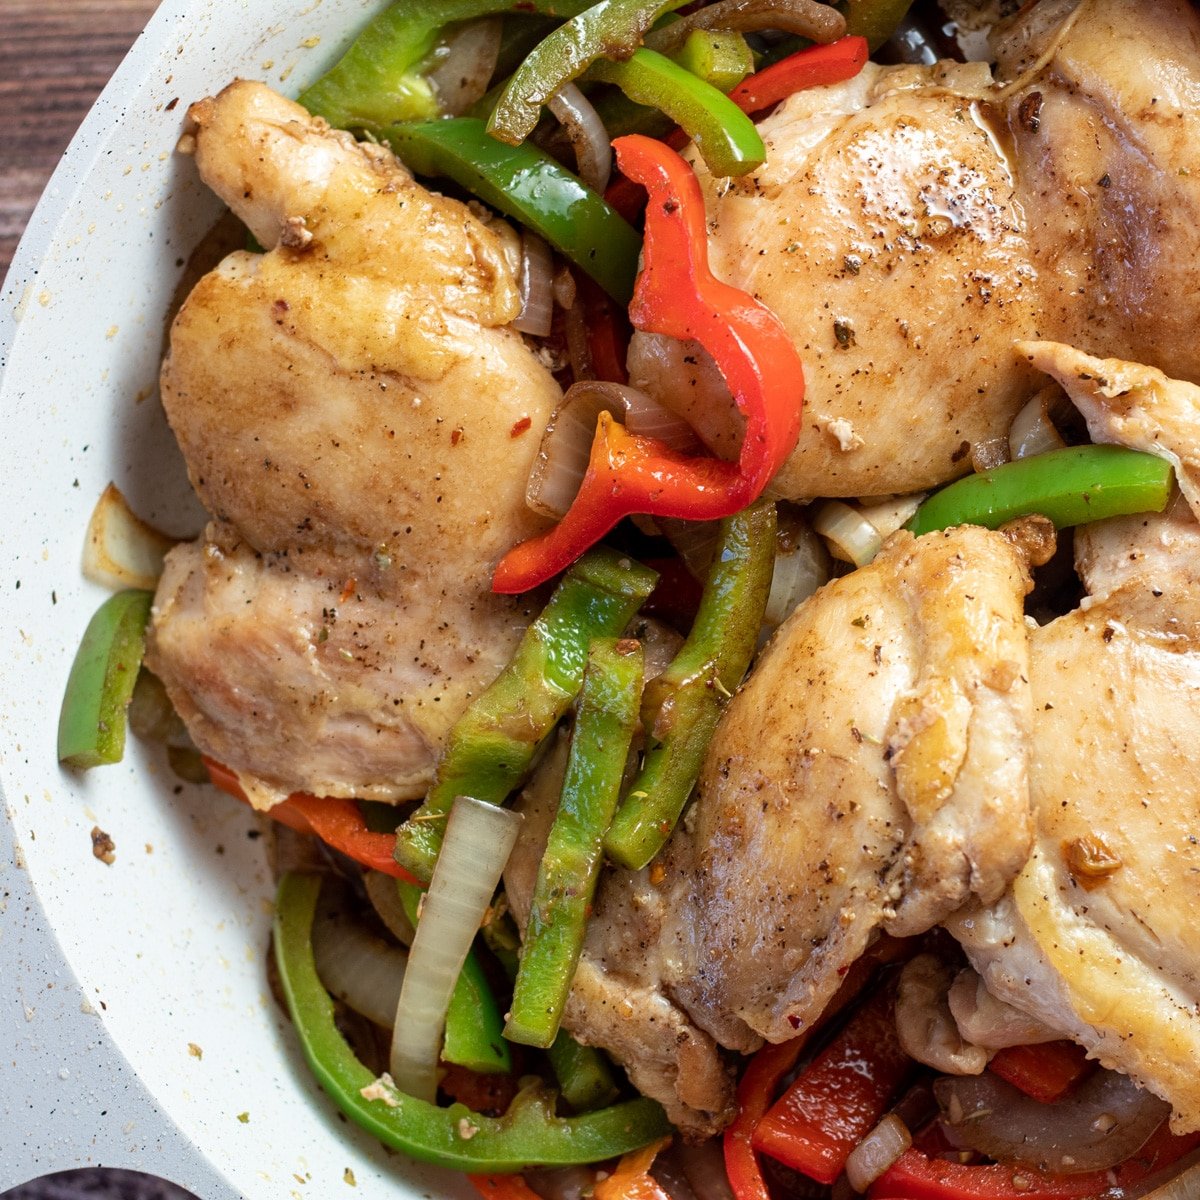 Ayam dan paprika dengan wajan yang mudah adalah makanan semarak yang disajikan bersama dalam waktu singkat.